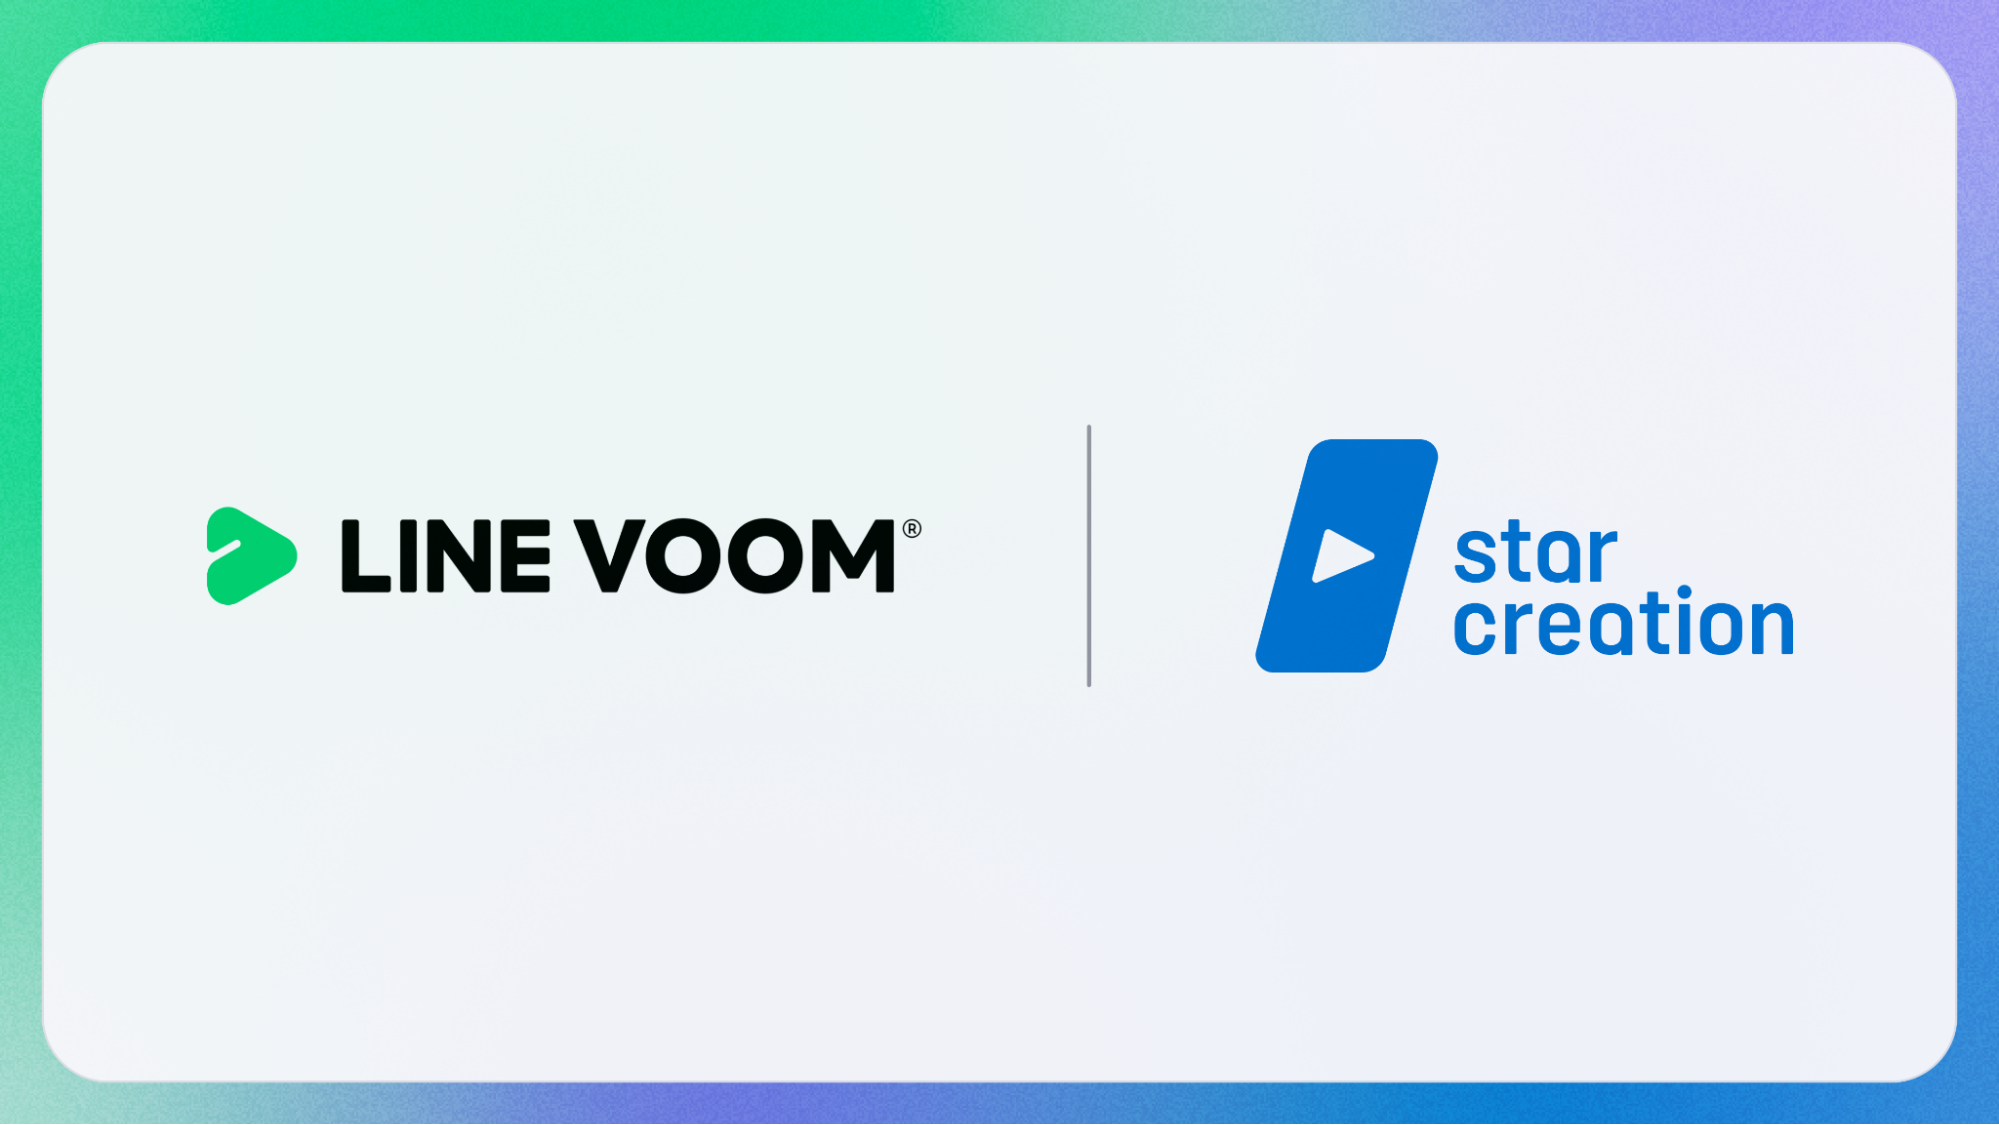 Star Creationが、LINE VOOMパートナーとしてMCN契約を締結